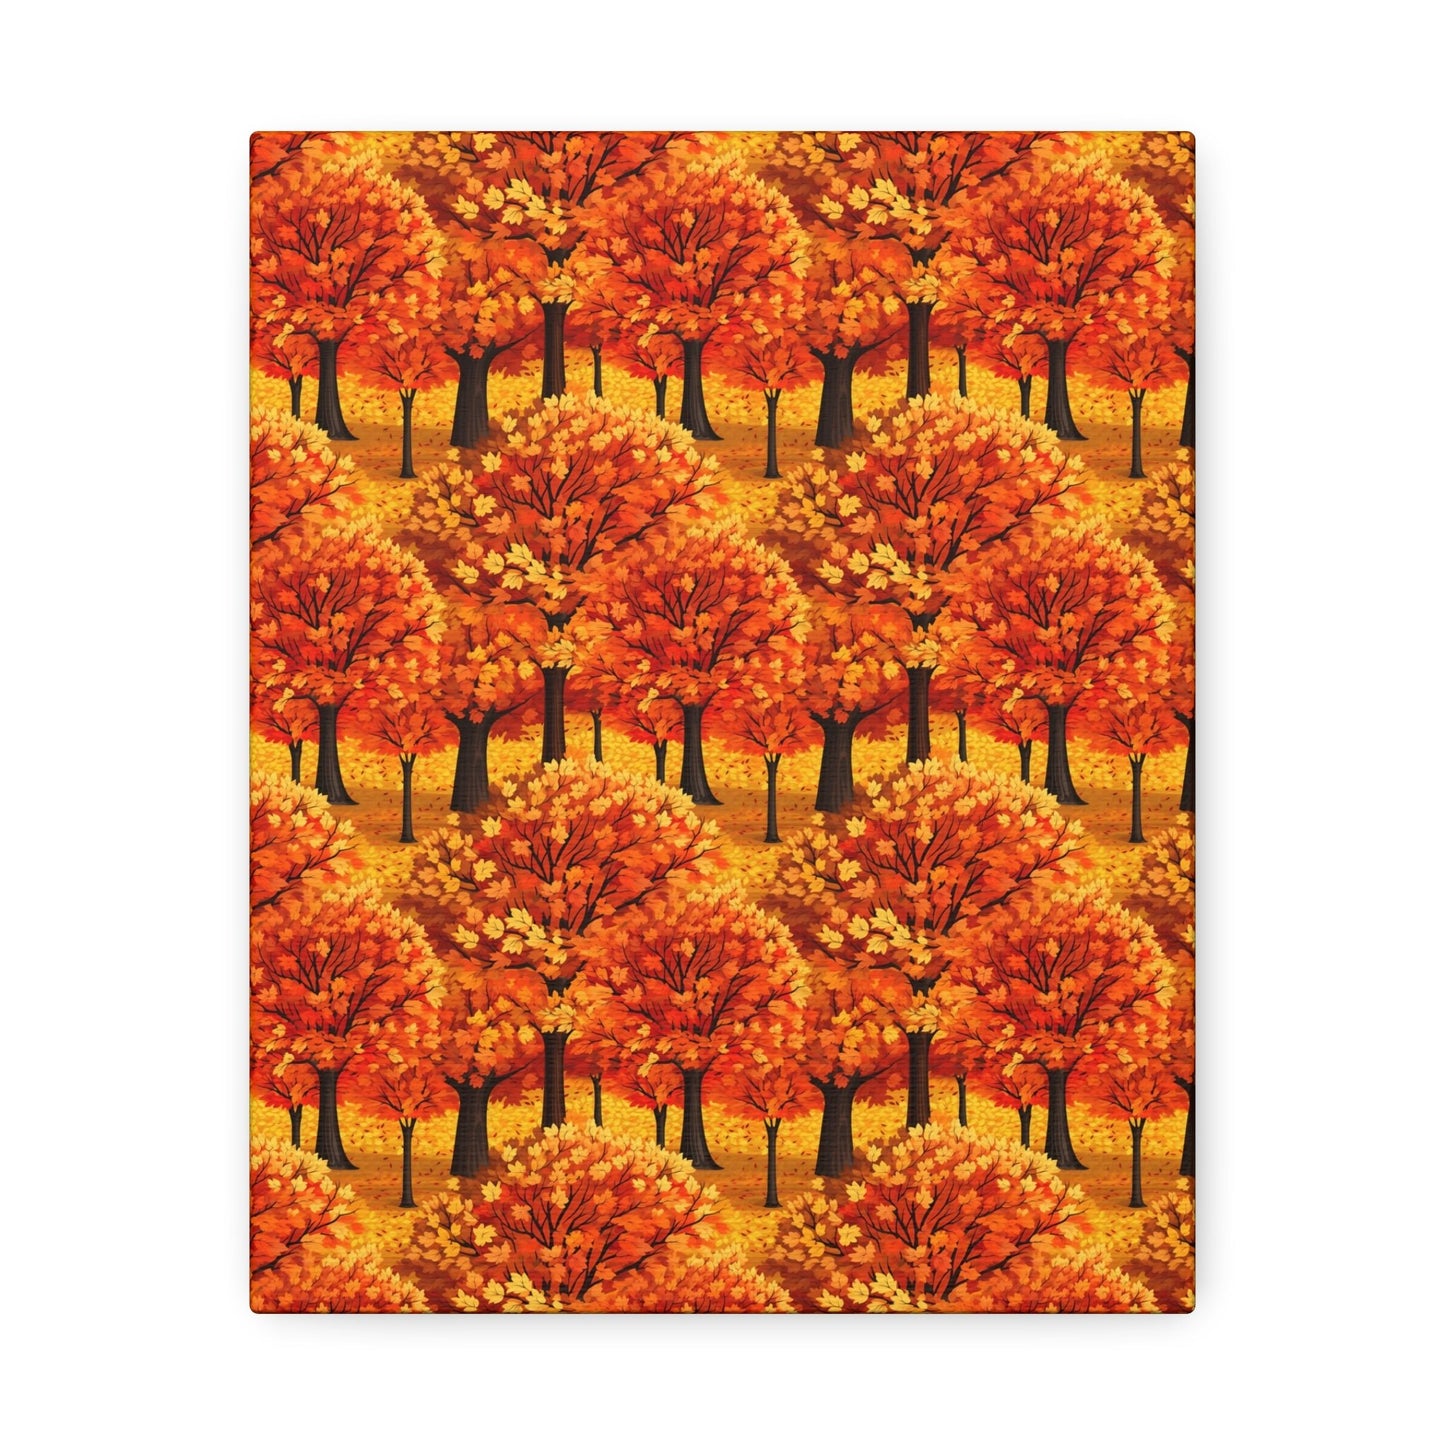 Impasto-Style Woodlands: High-Contrast Autumn Foliage - Satin Canvas, Stretched - Pattern Symphony